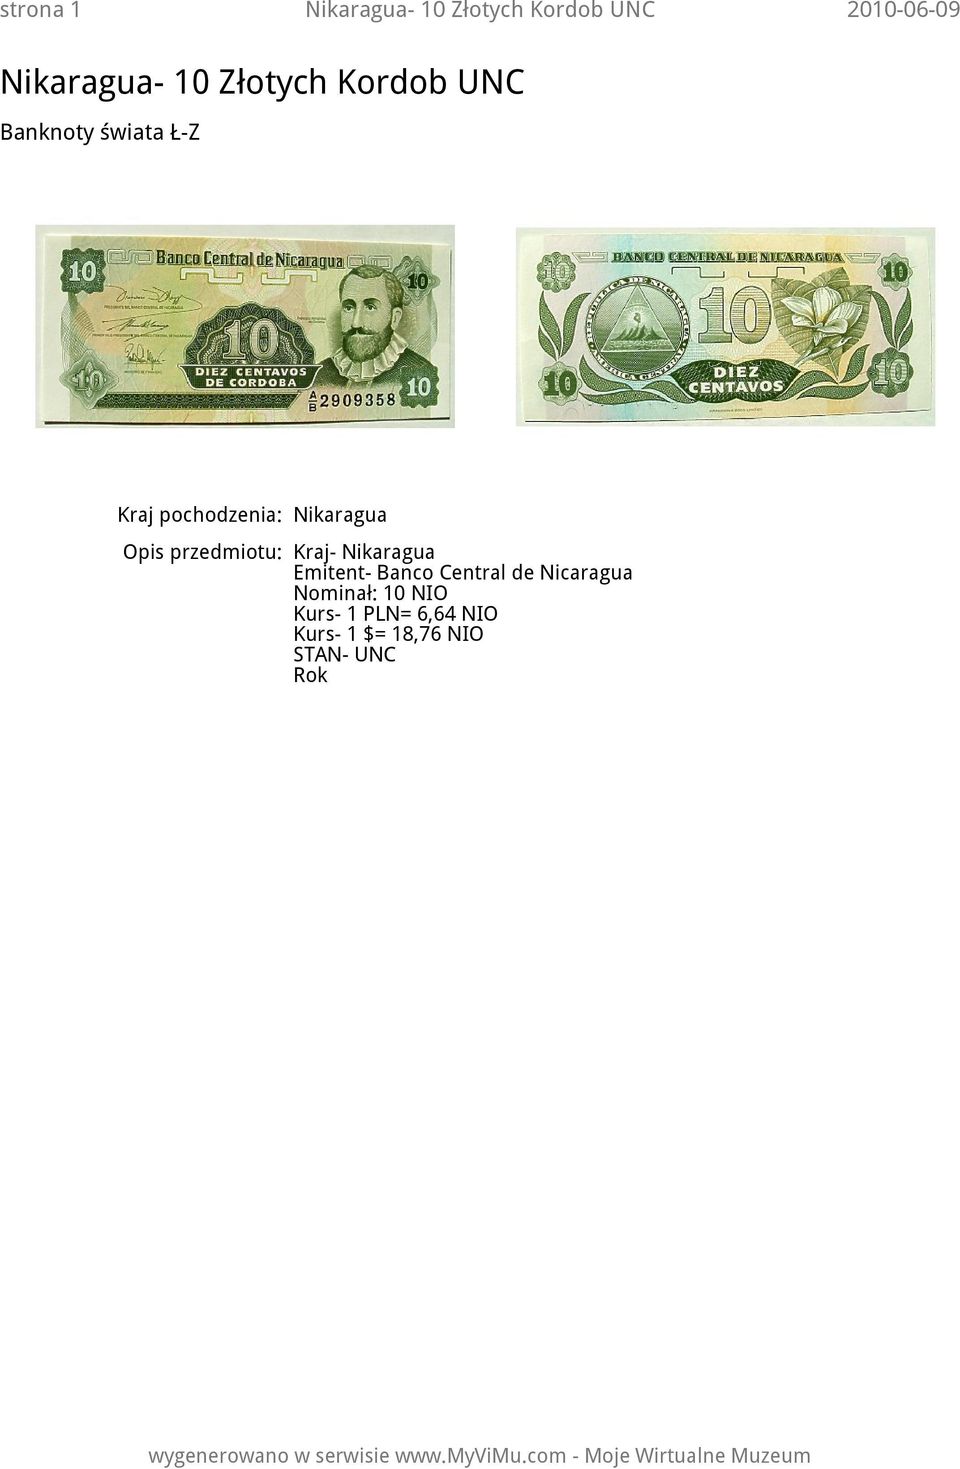 Opis przedmiotu: Kraj- Nikaragua Emitent- Banco Central de